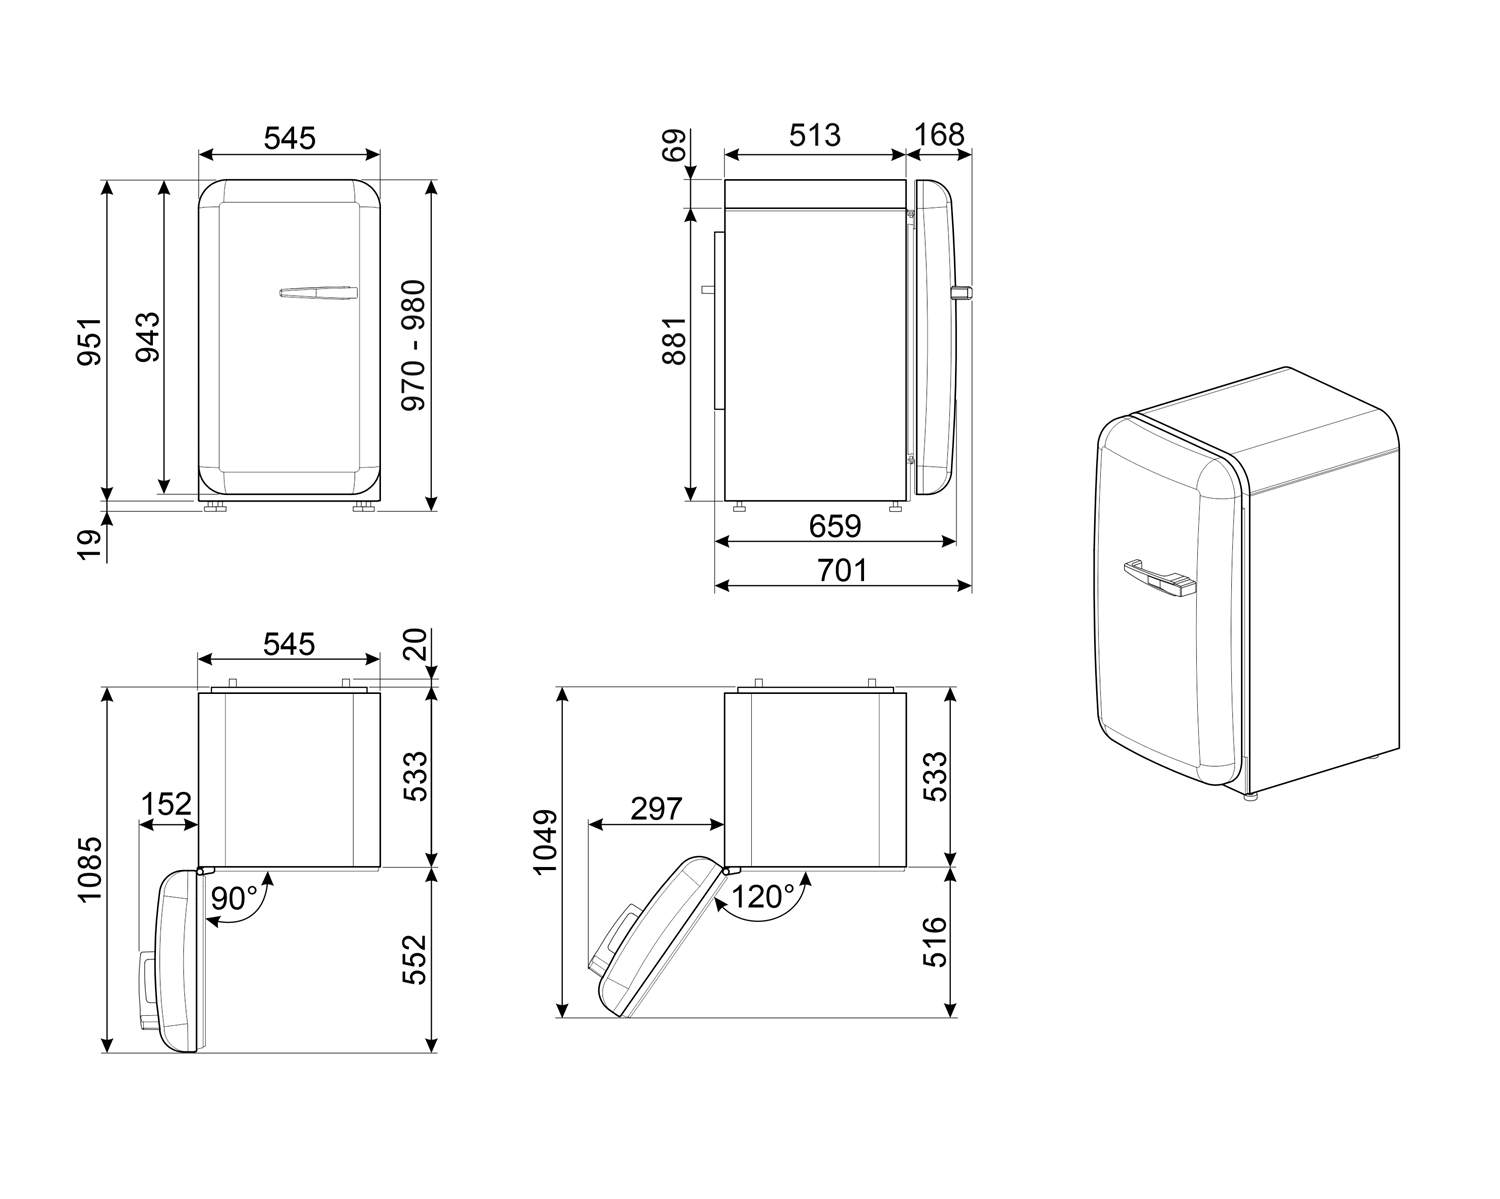 Maattekening SMEG koelkast tafelmodel wit FAB10LWH5